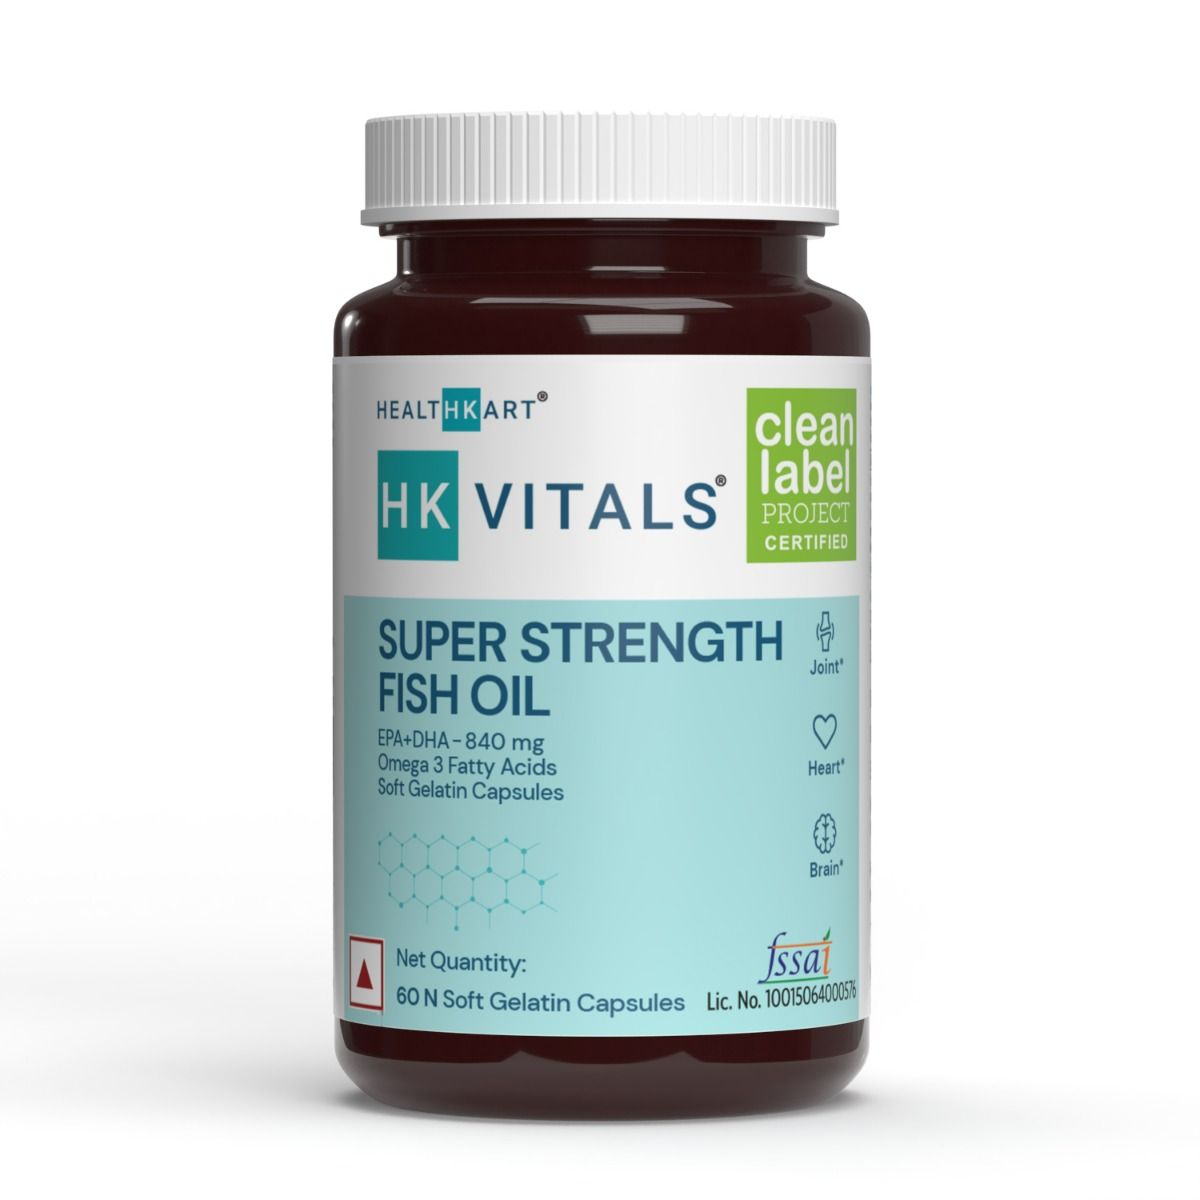 HealthKart HK Vitals Super Strength Fish Oil, 60 Soft Gelatin Capsules, Pack of 1 